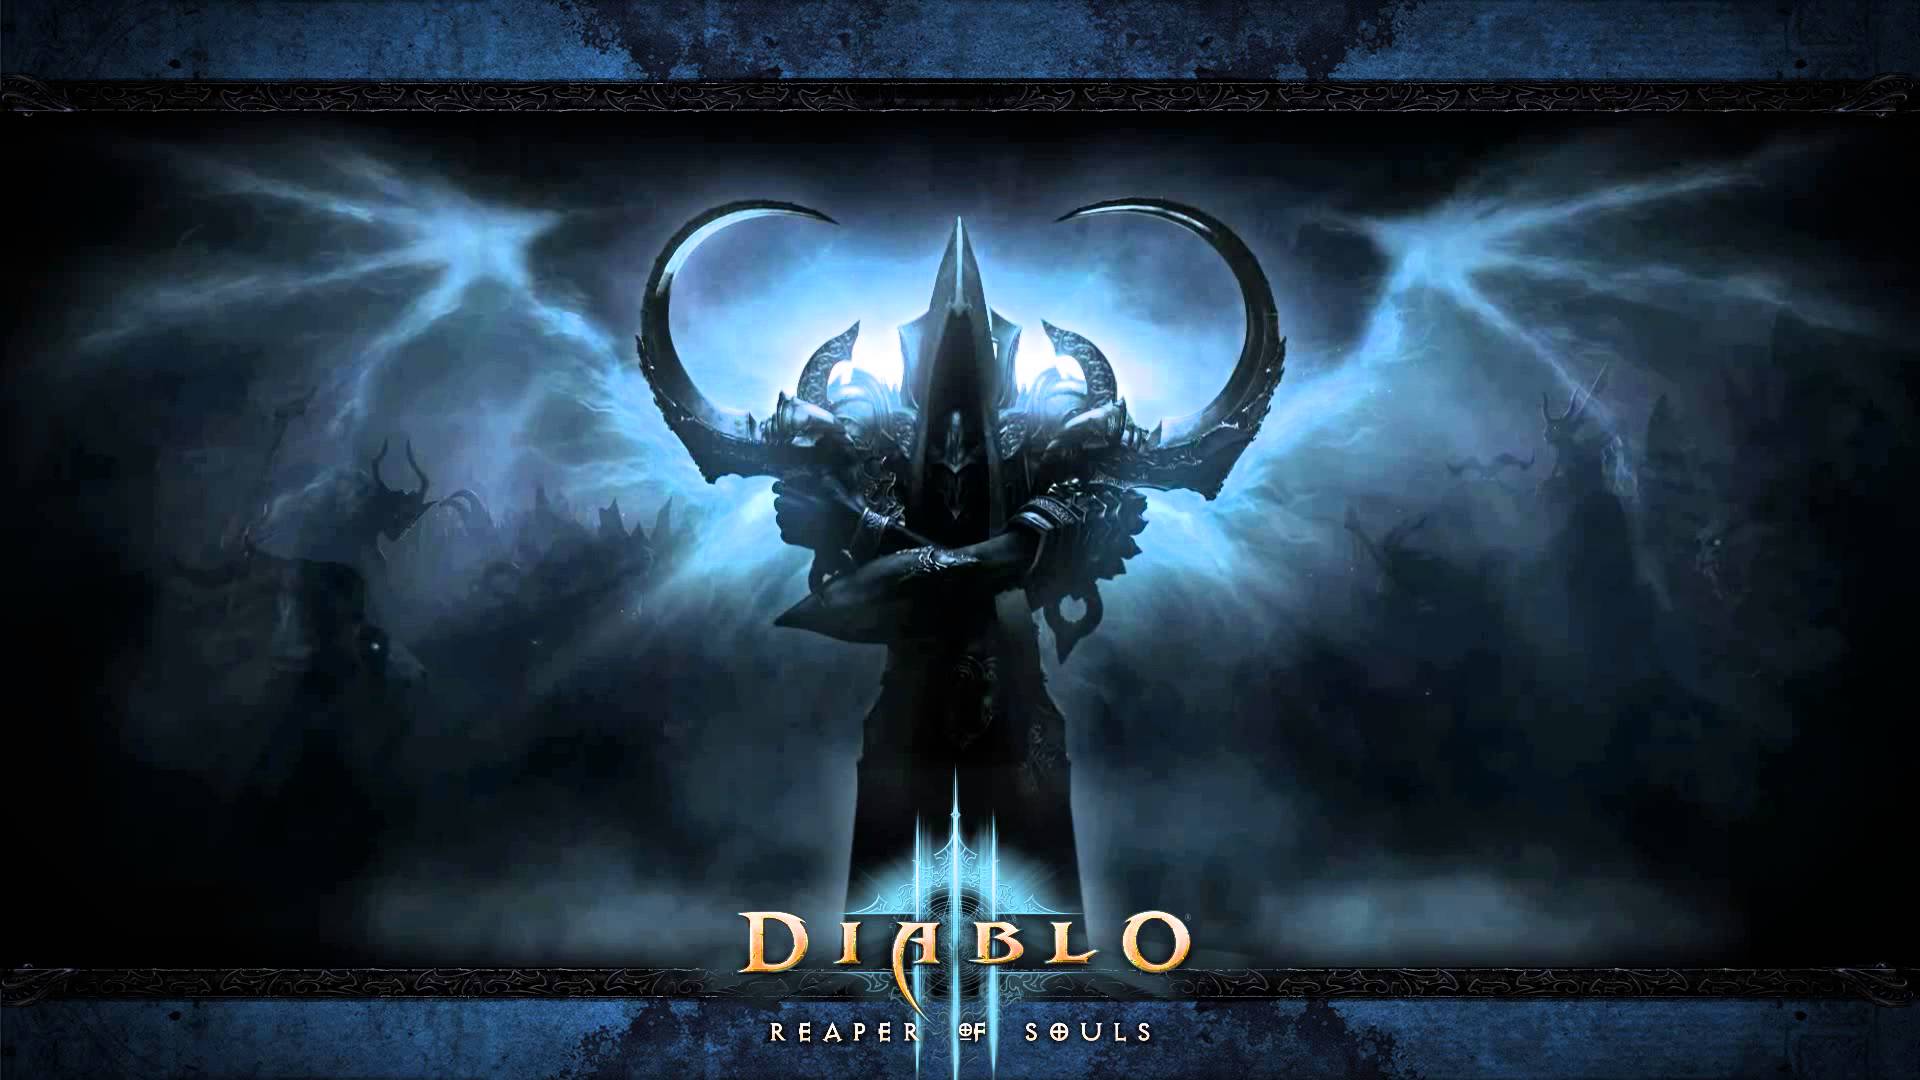 diablo 3 reaper of souls pc download full version free